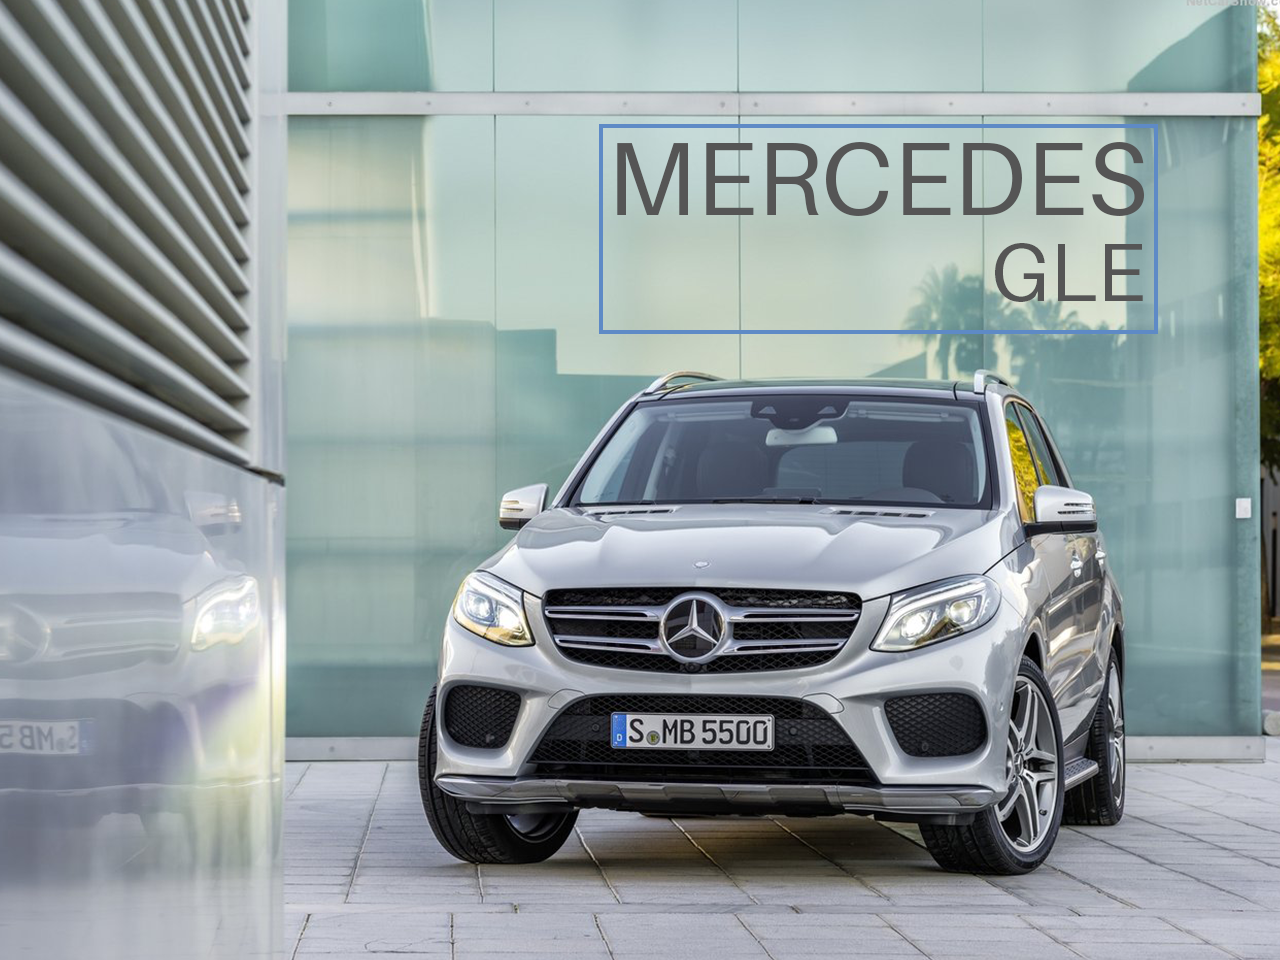 Mercedes Premium Large SUV - The New GLE